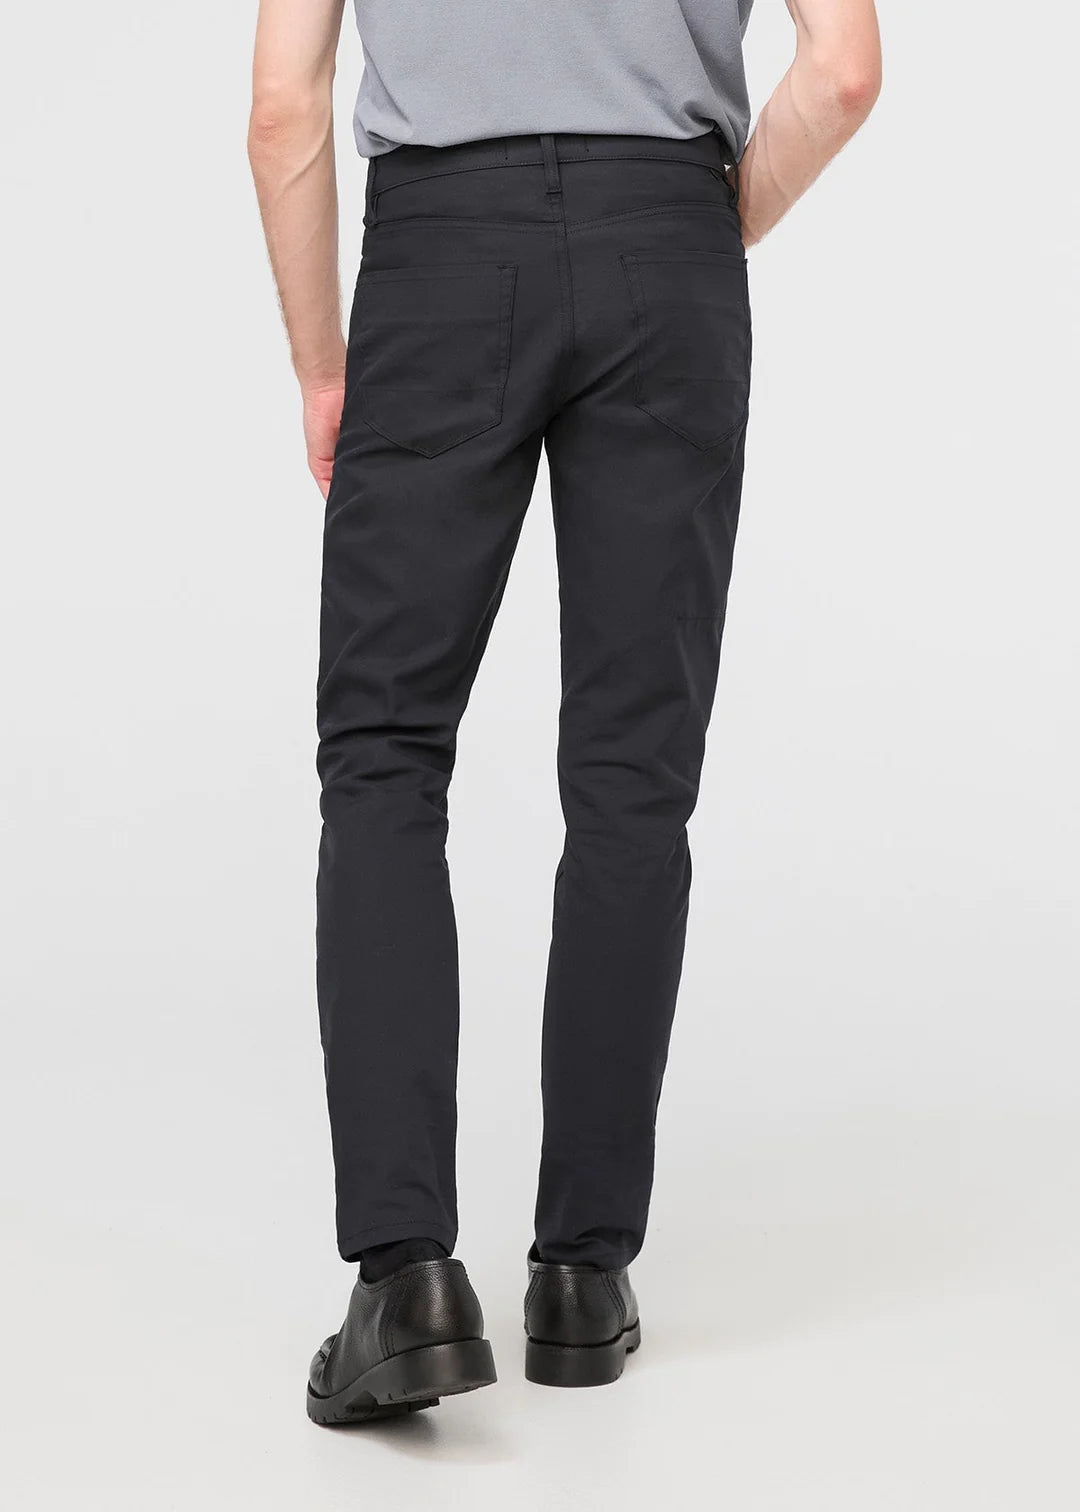 NuStretch Slim 5-Pocket Pants